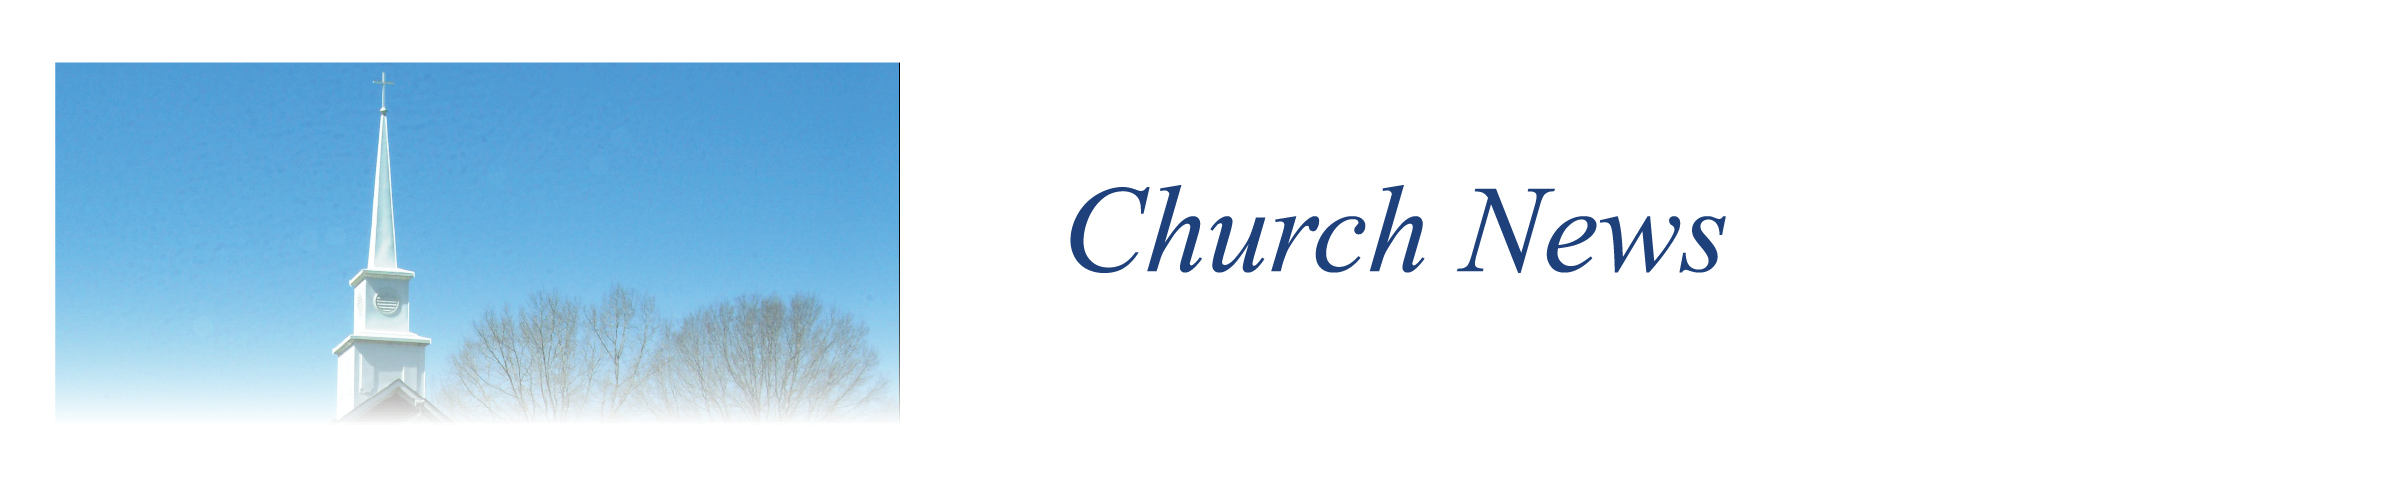 c-church news